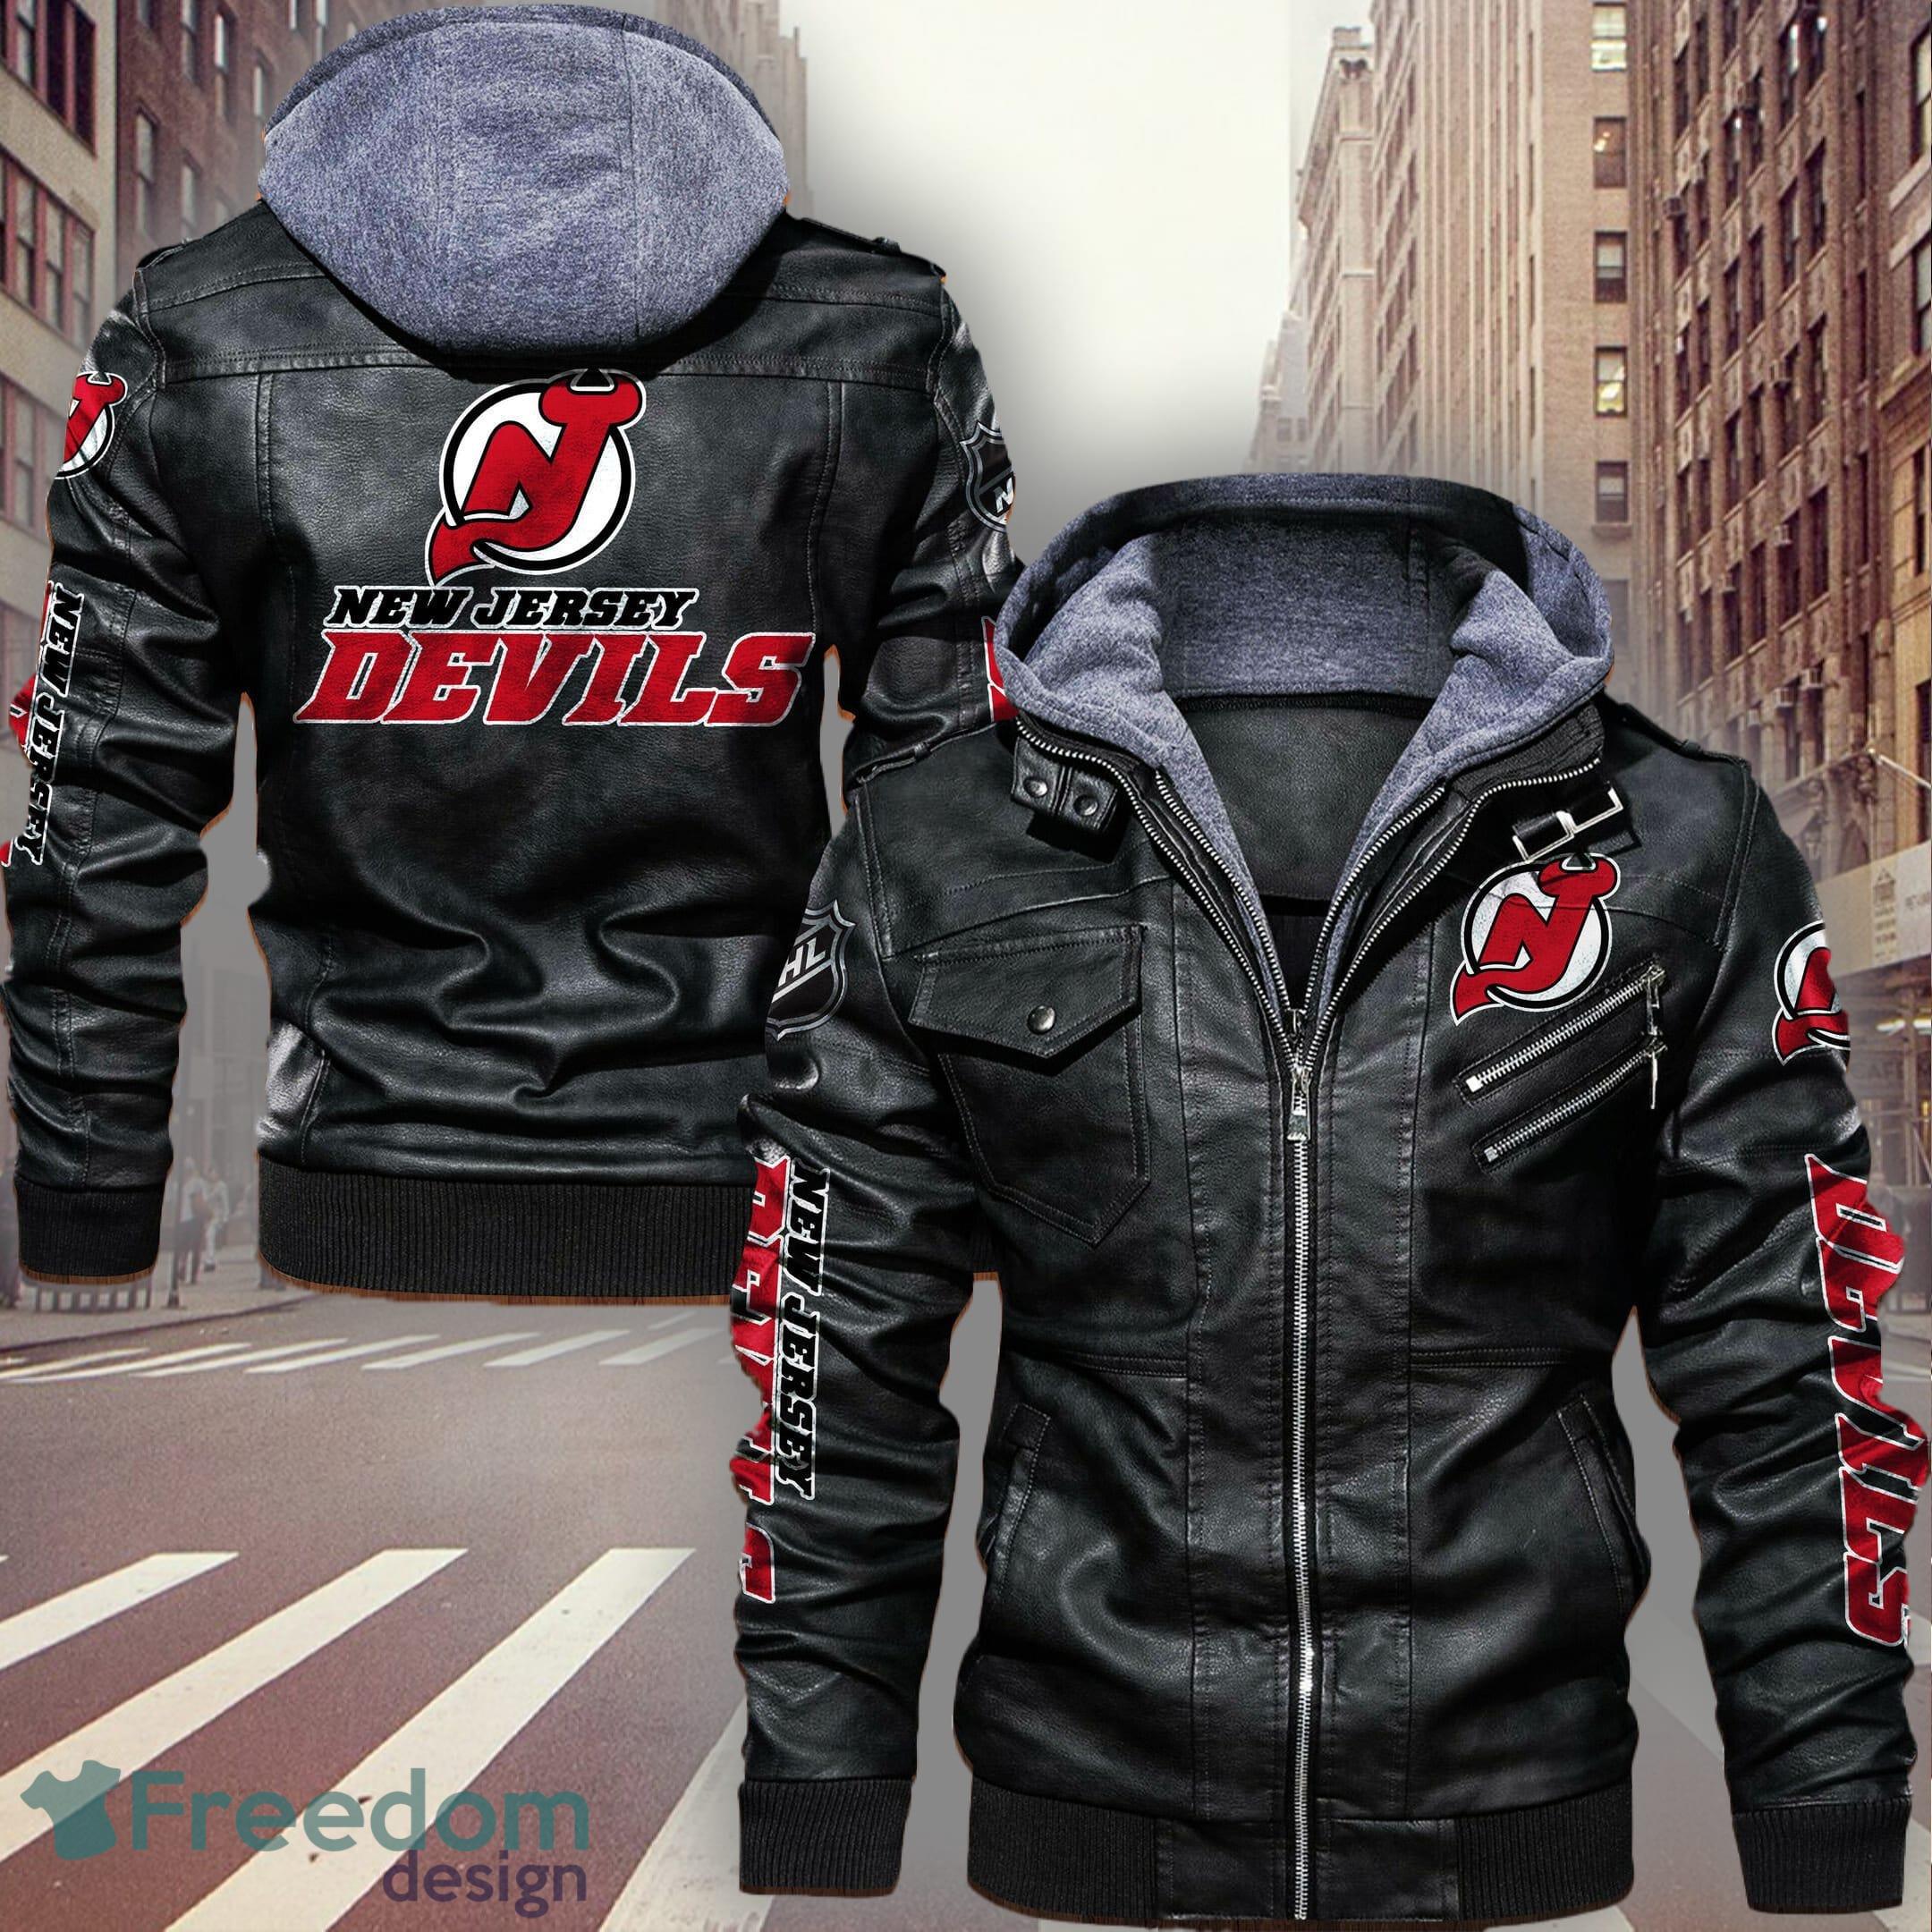 New Jersey Devils is love pride shirt, hoodie, sweater, long